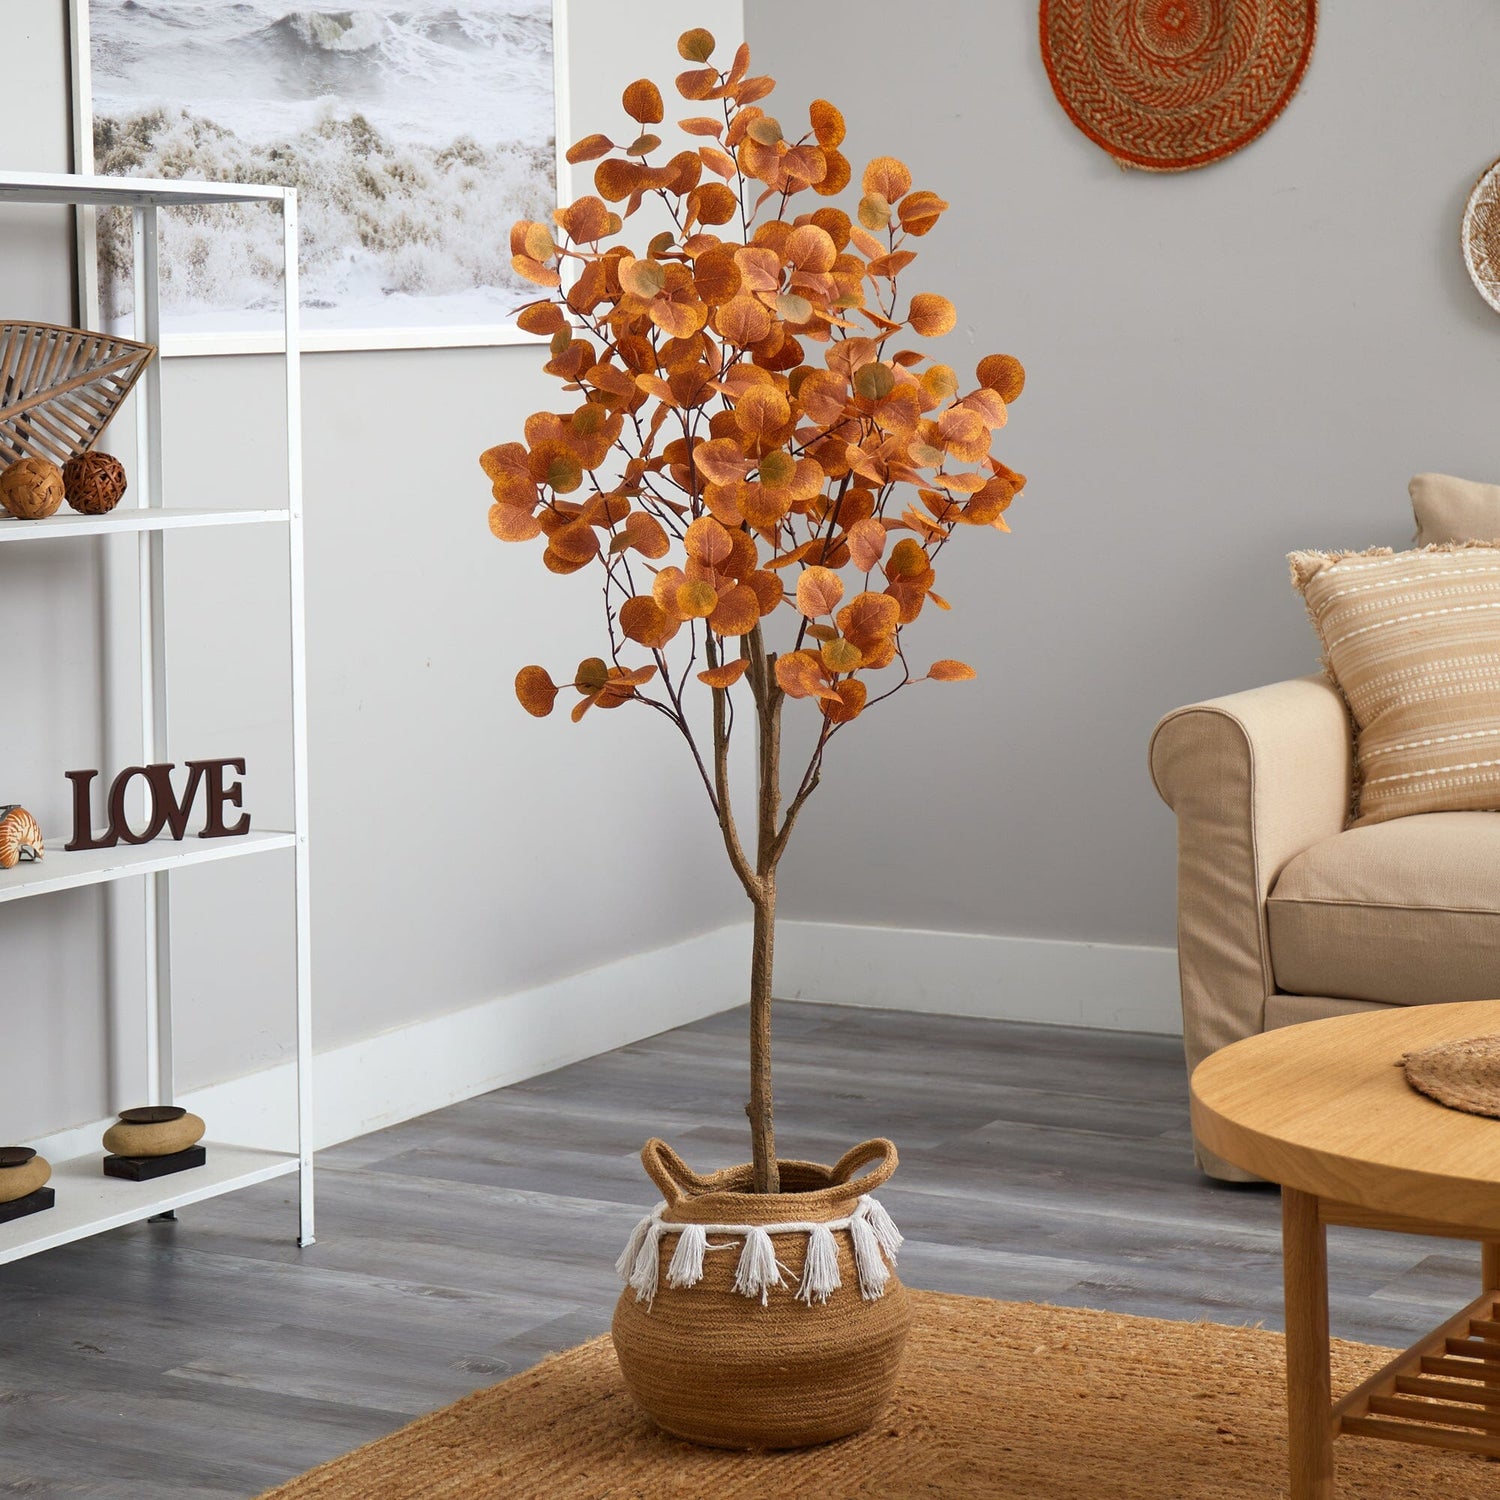 5’ Artificial Autumn Eucalyptus Tree with Handmade Jute & Cotton Basket with Tassels